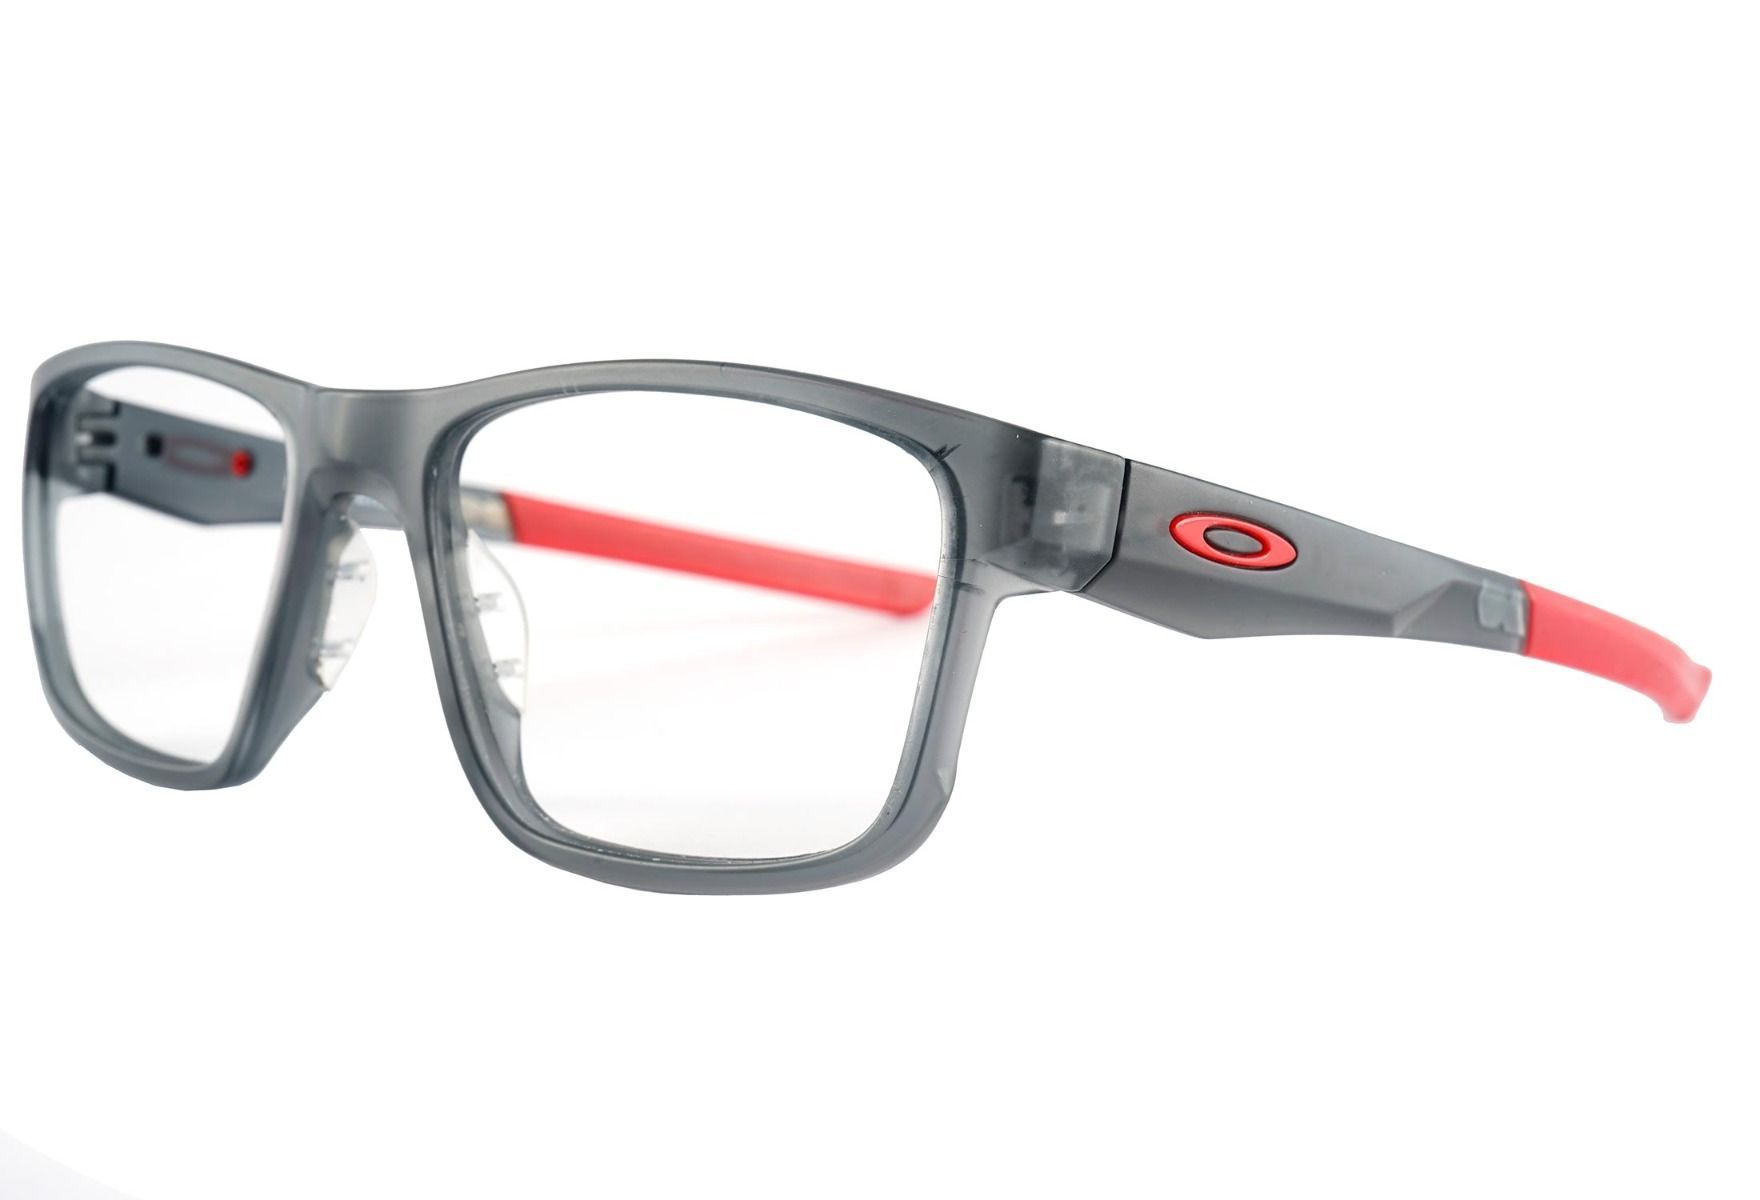 Oakley briller - Hyperlink ox8078 05 - Svart, Large Hel ramme i Plast - Rektangulære